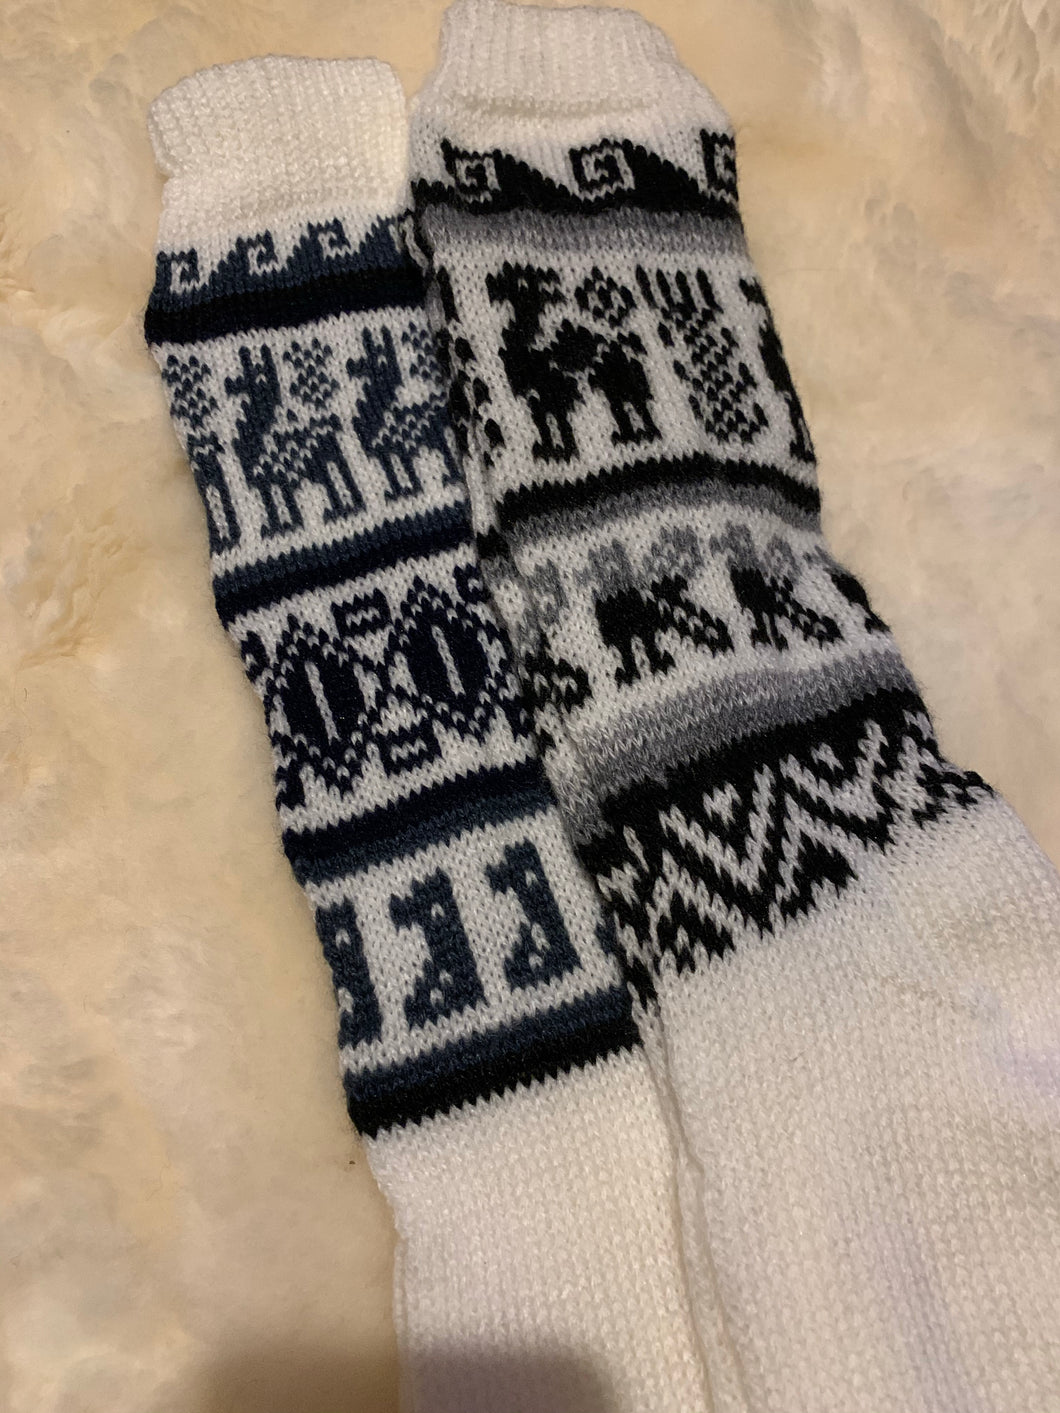 Alpaca socks with llama details